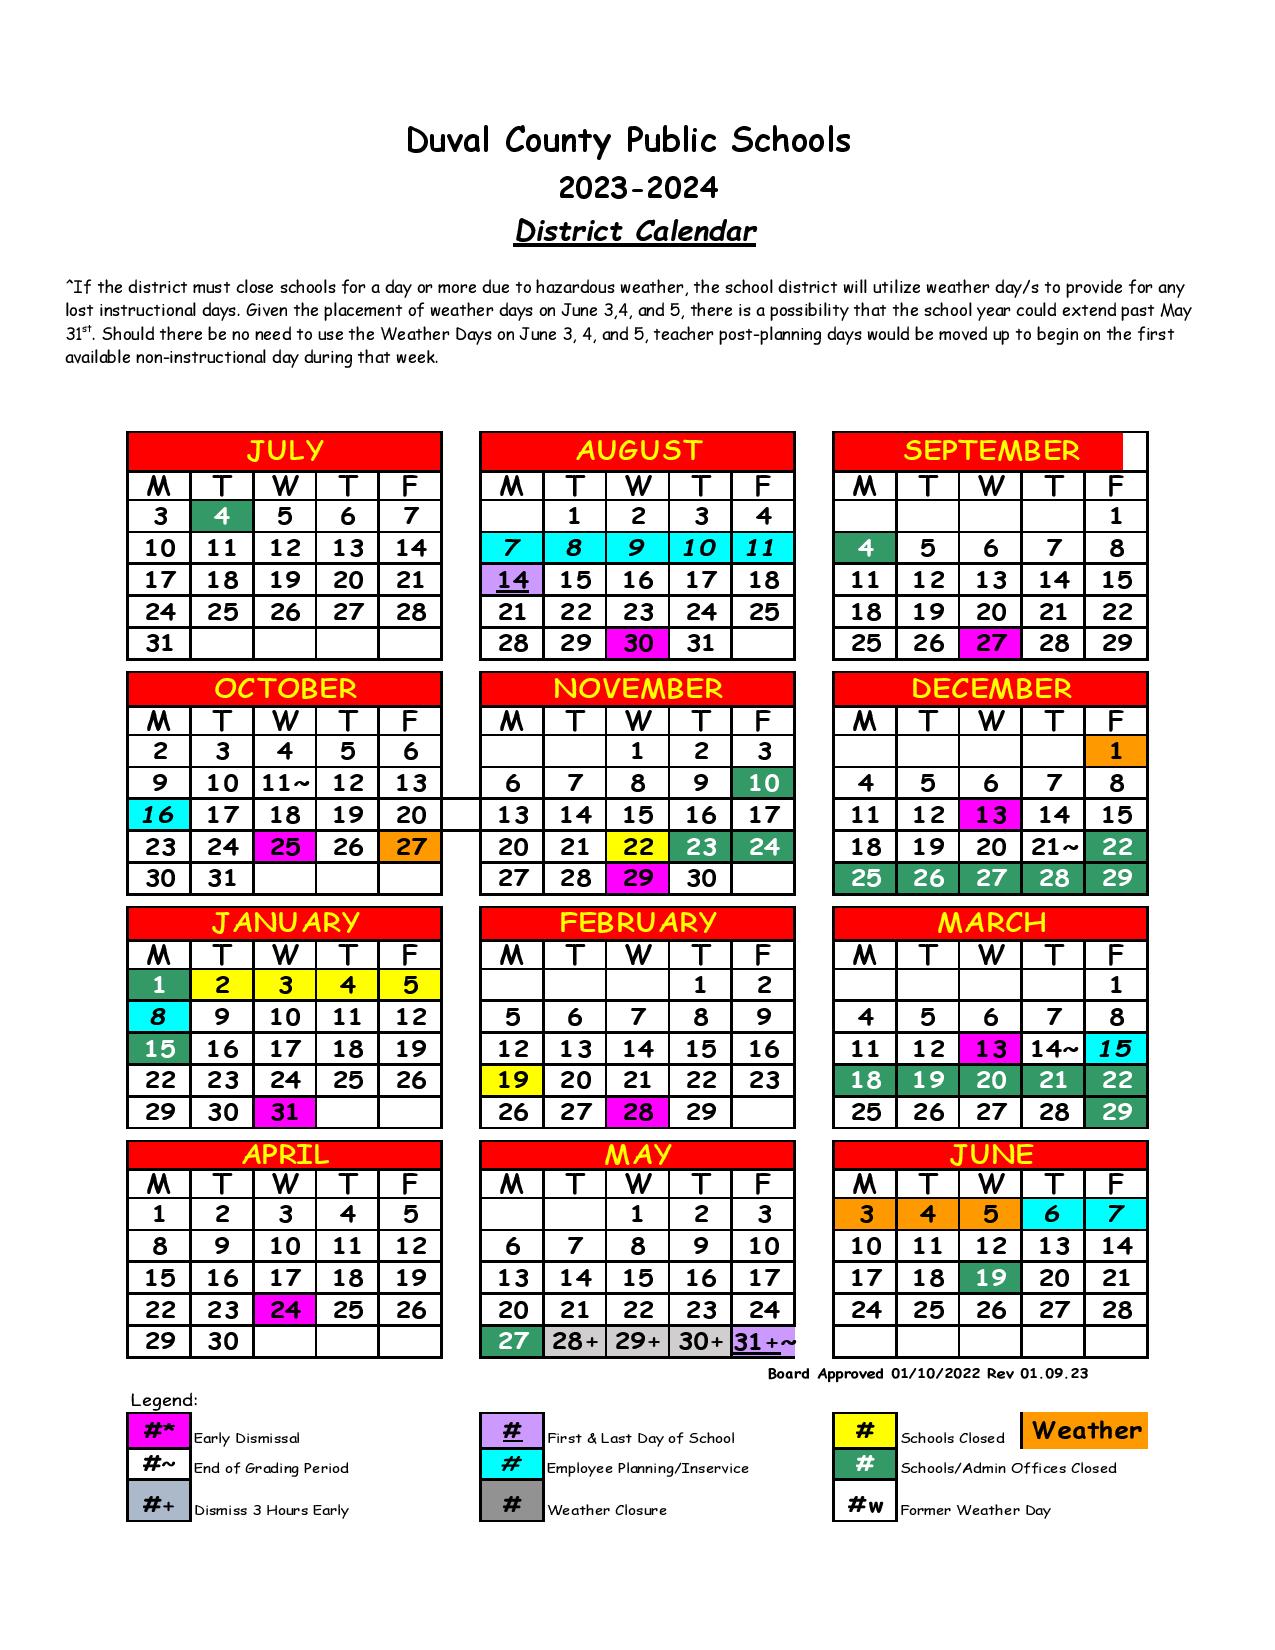 Duval County Public Schools Calendar 20232024 (Holiday Breaks)